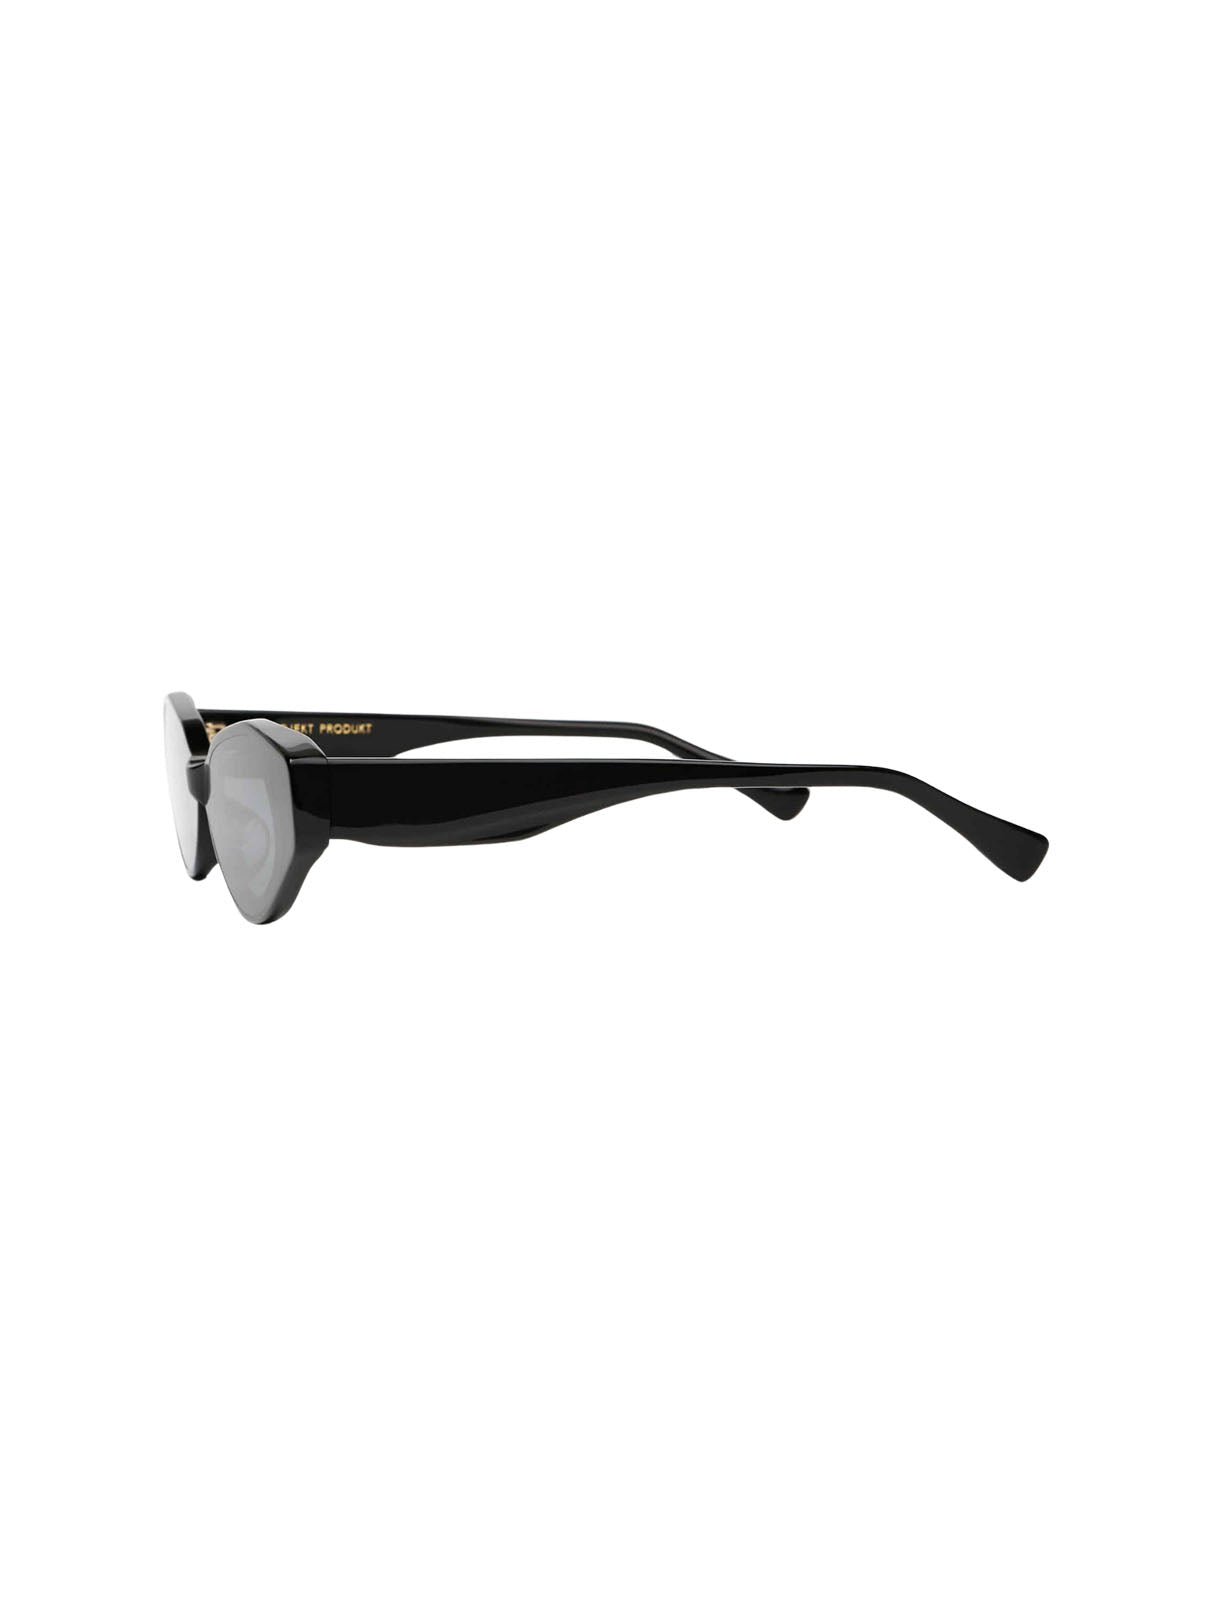 Angular Squared Sunglasses